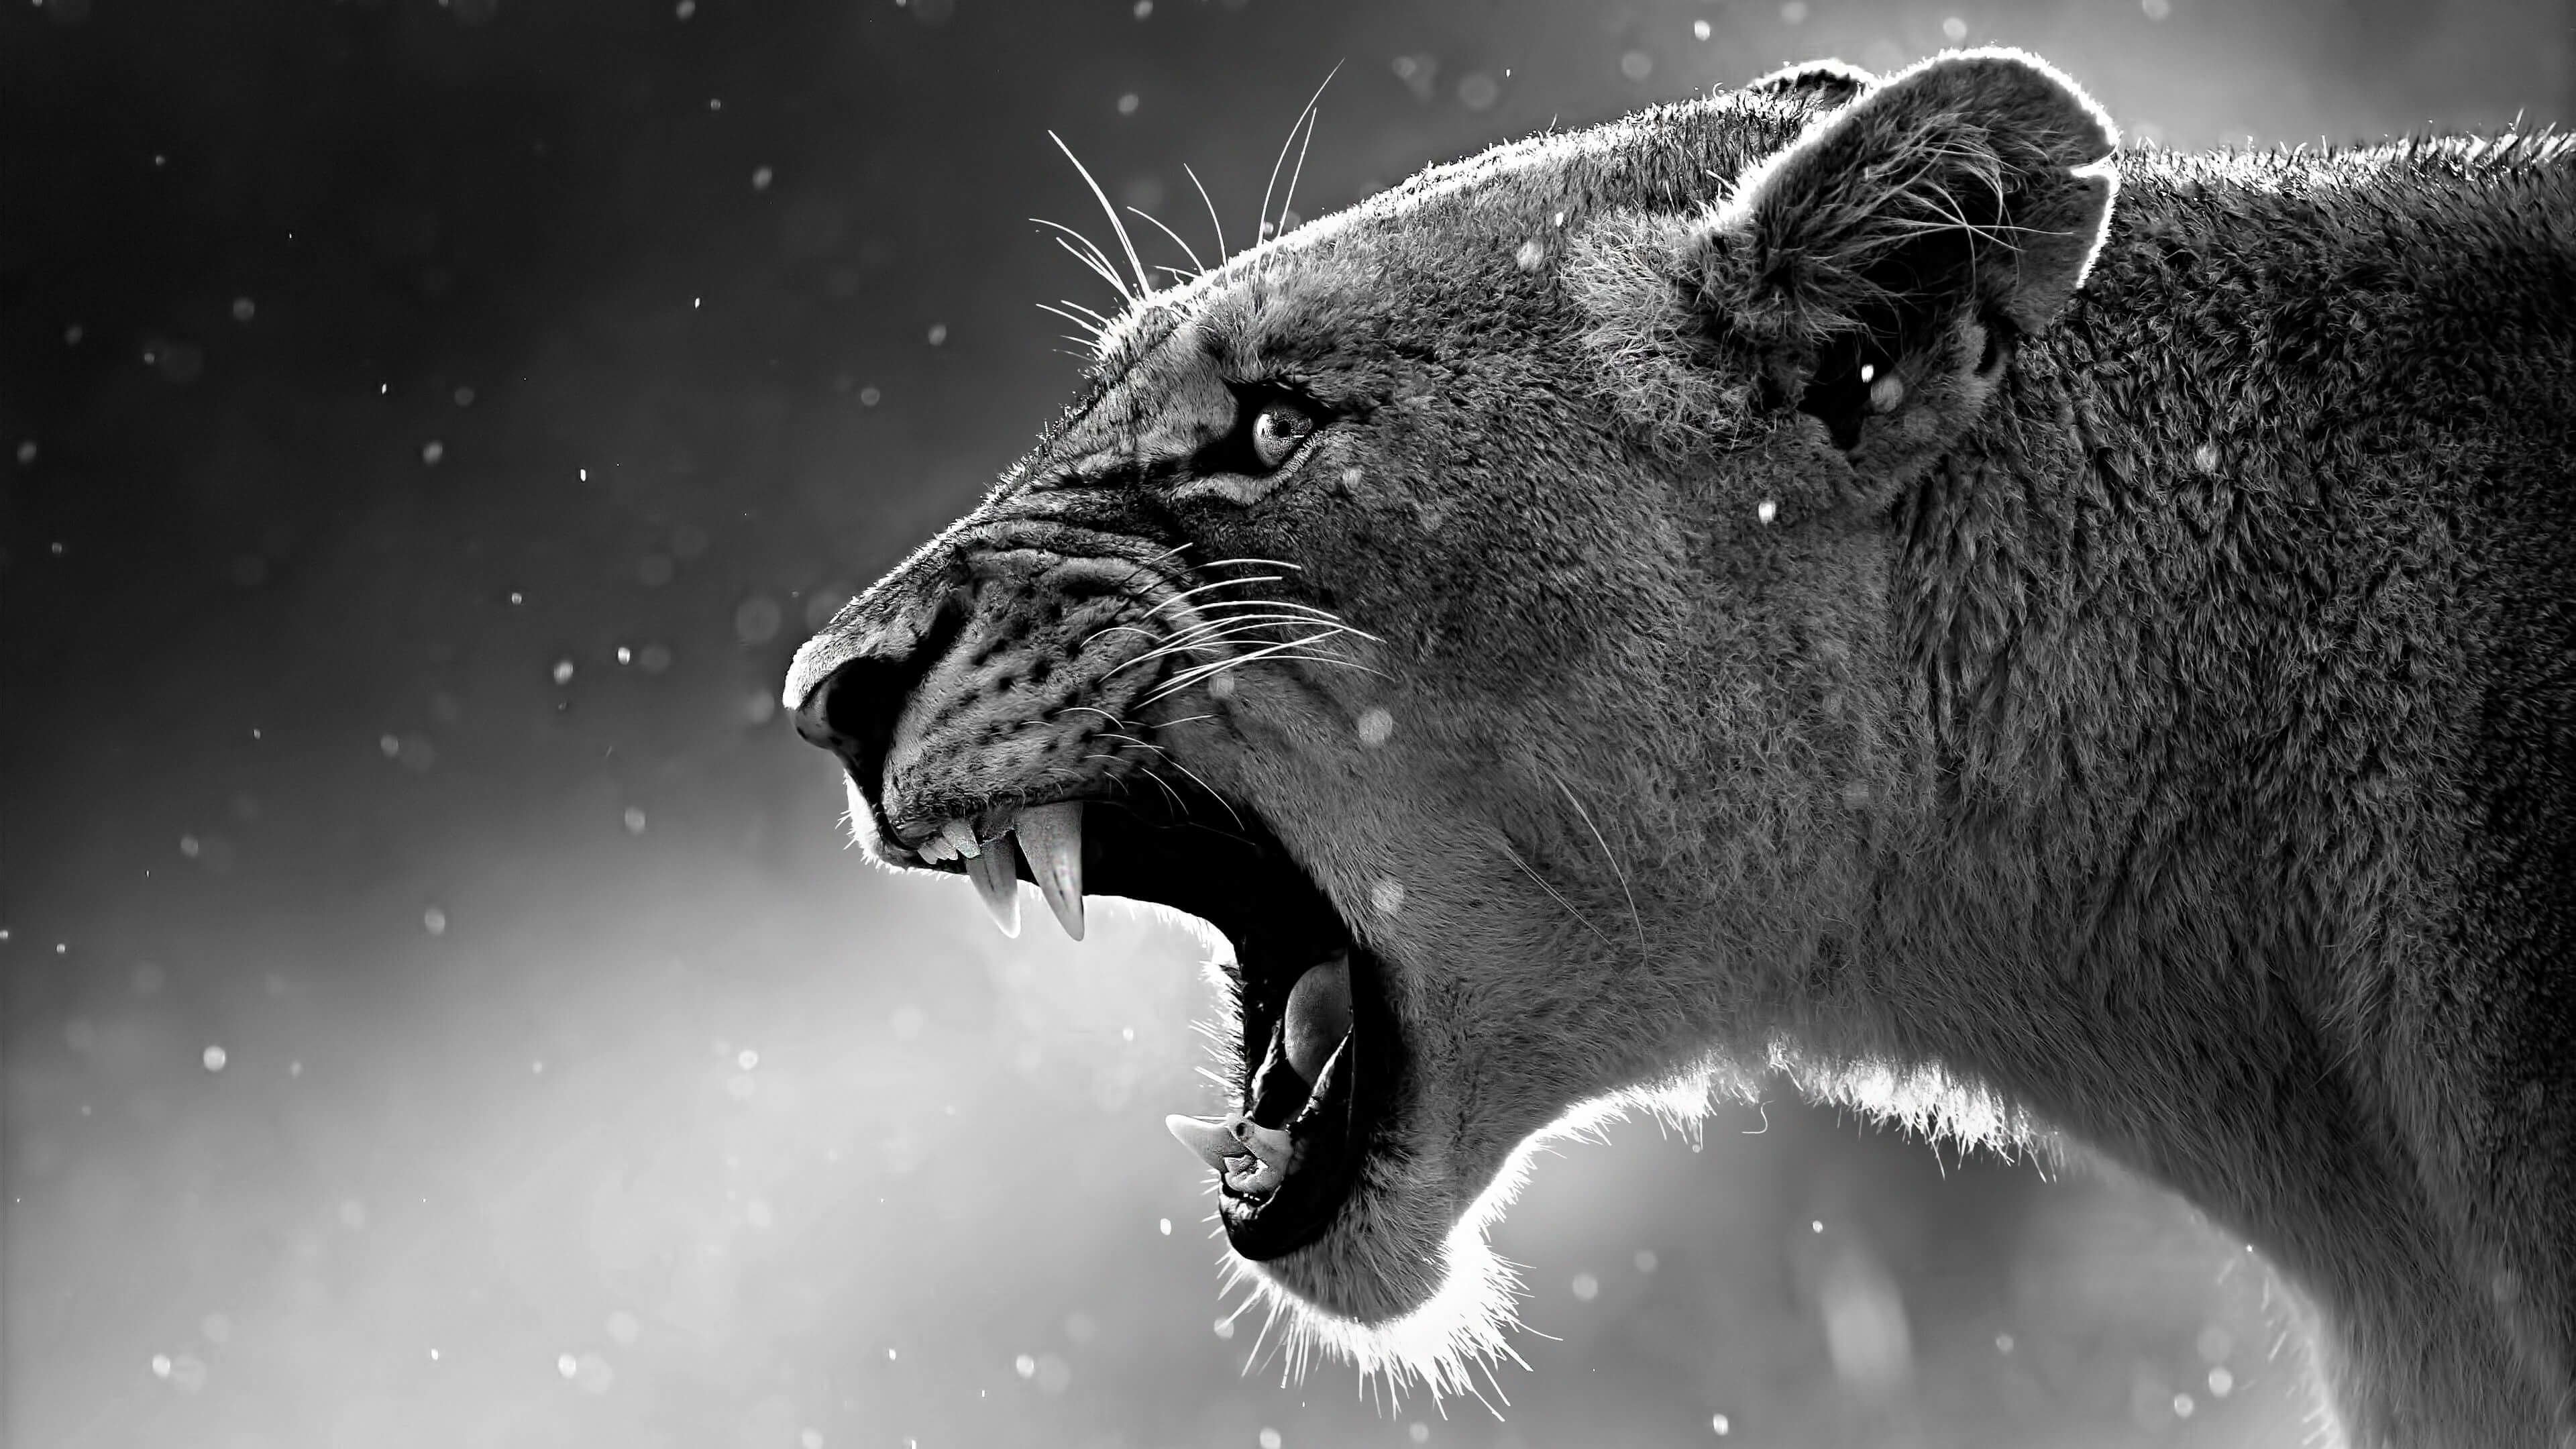 Lioness in Black & White Wallpaper for Desktop 4K 3840x2160